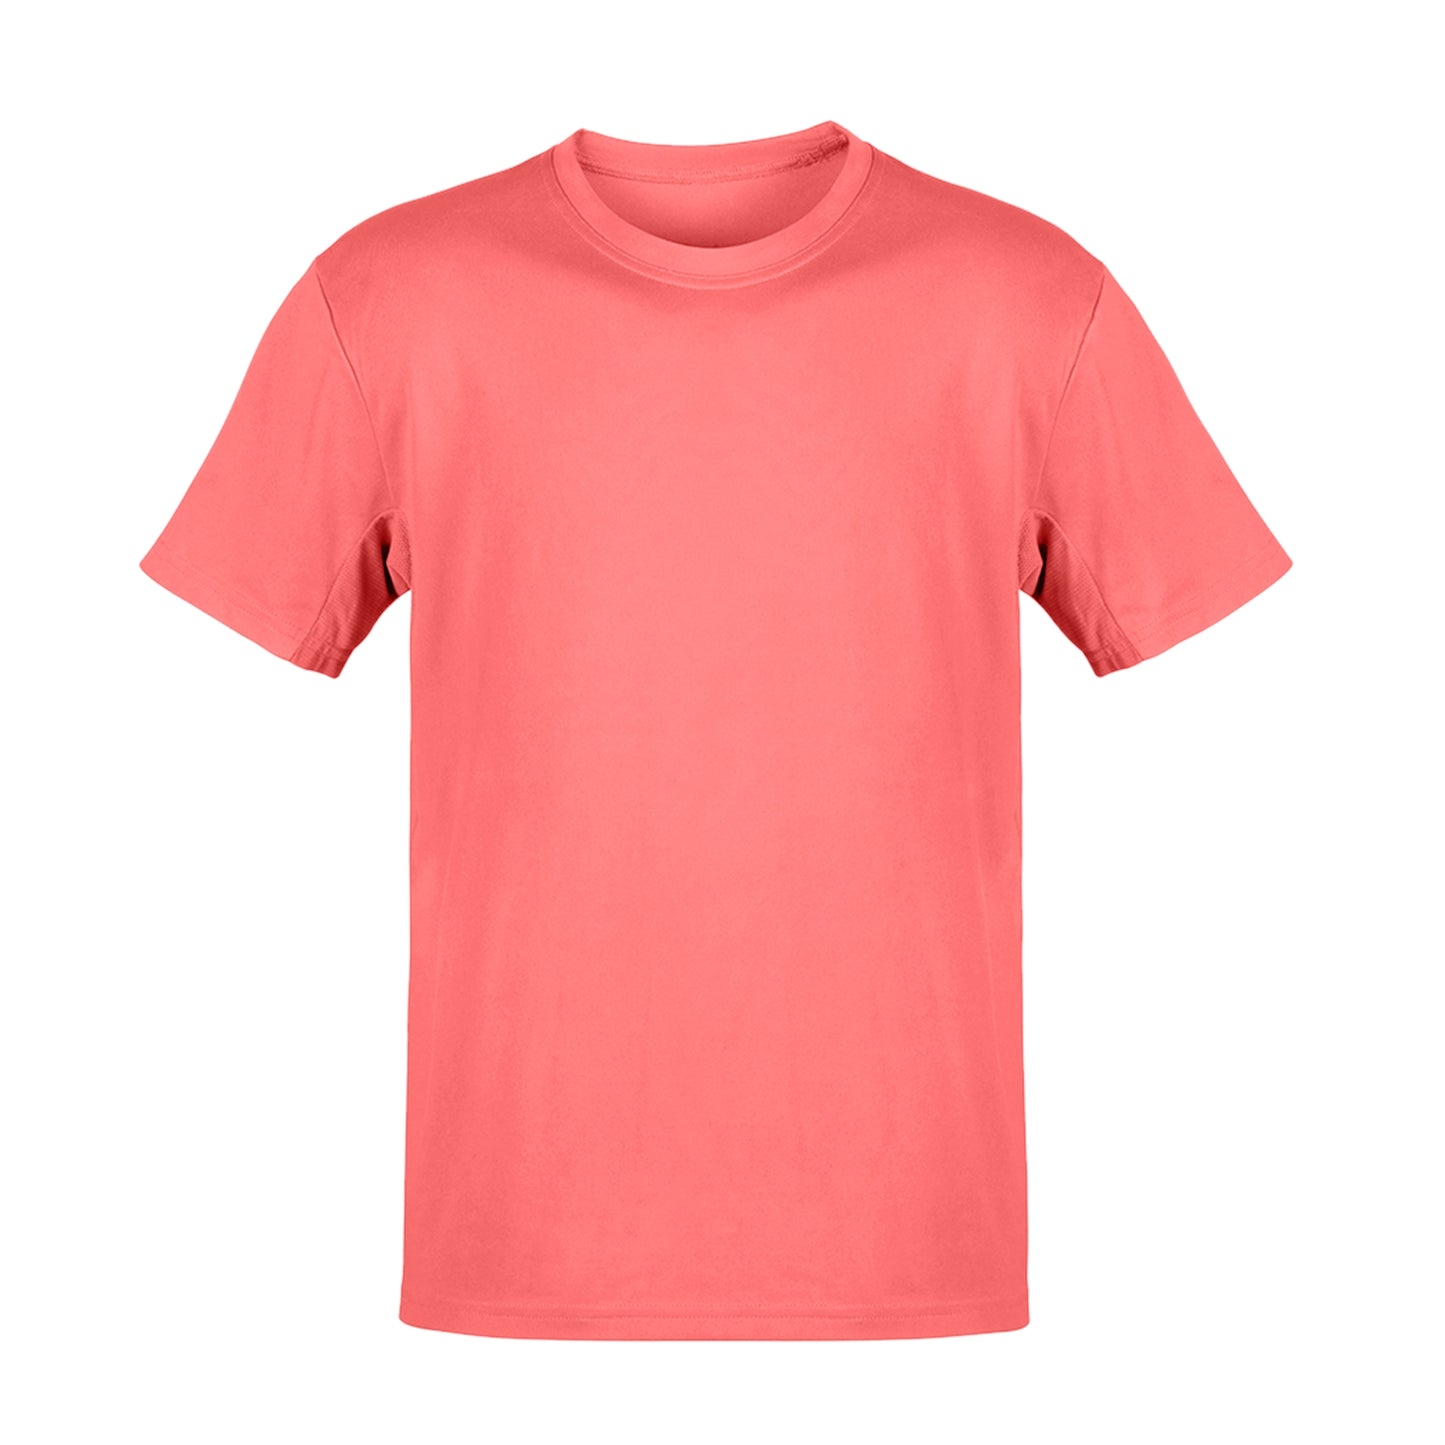 Half Pink T-shirt For Men - FlyingCart.pk